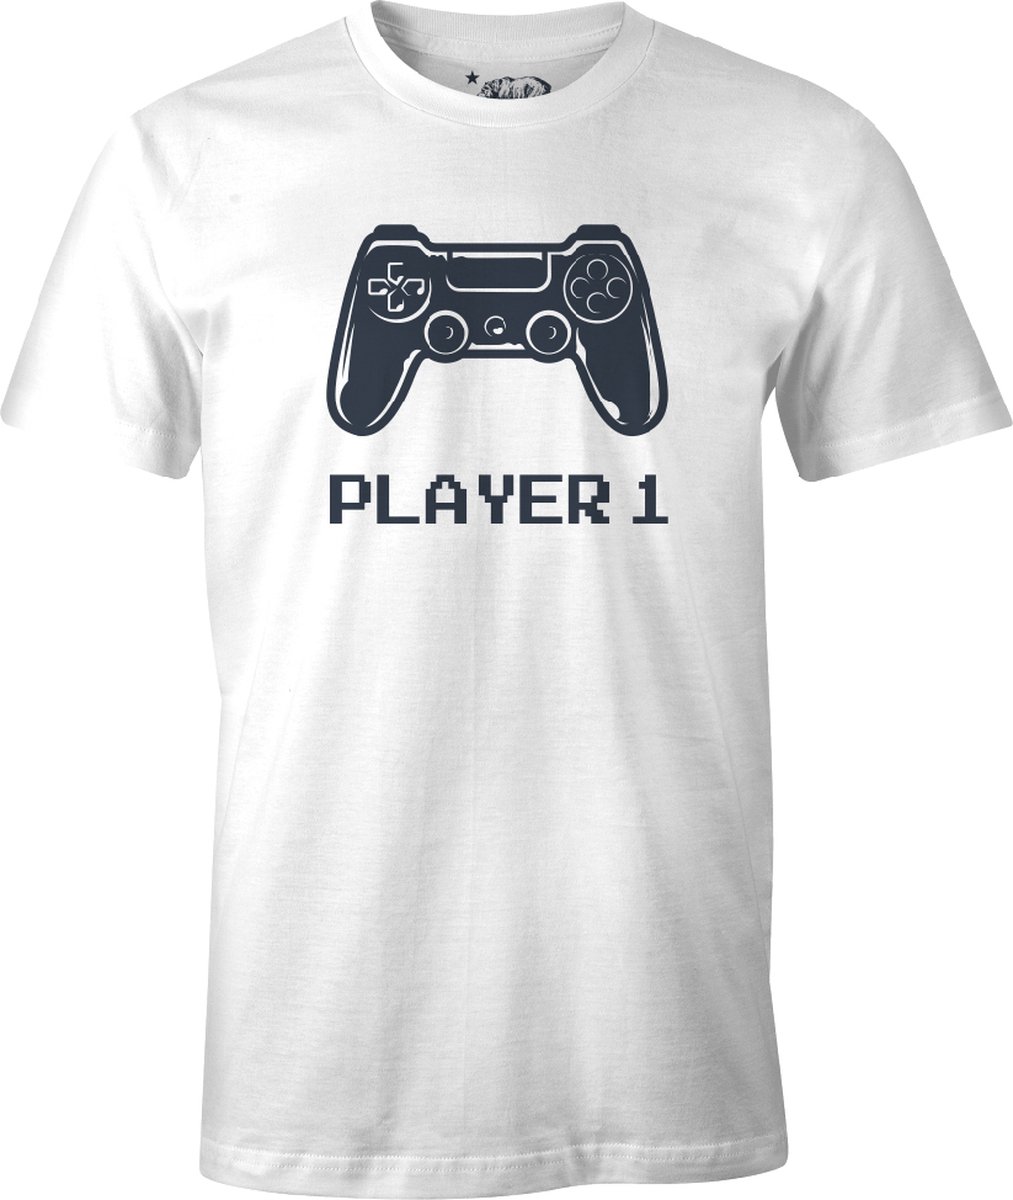 Gaming - Player 1 T-Shirt White - XL